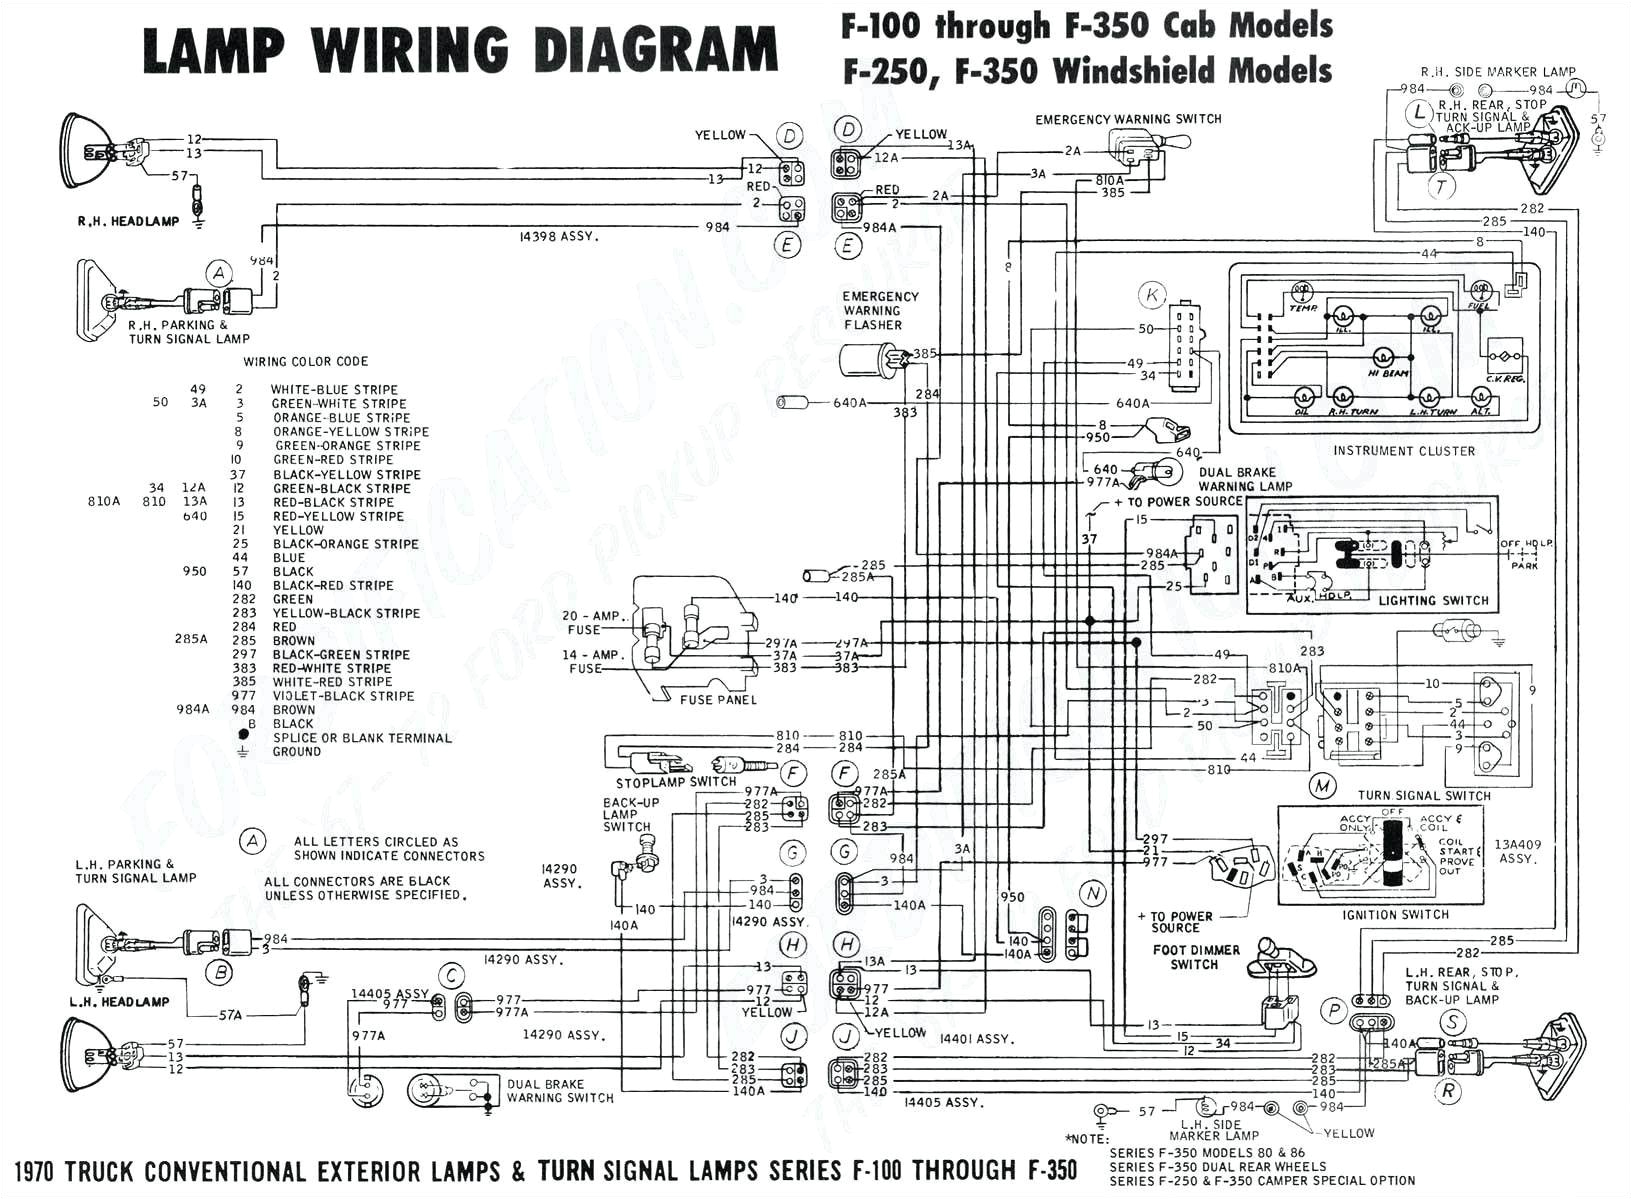 kenwood 921 amp wiring diagram best wiring librarycase dc wiring diagram schema wiring diagram onlineatv starter